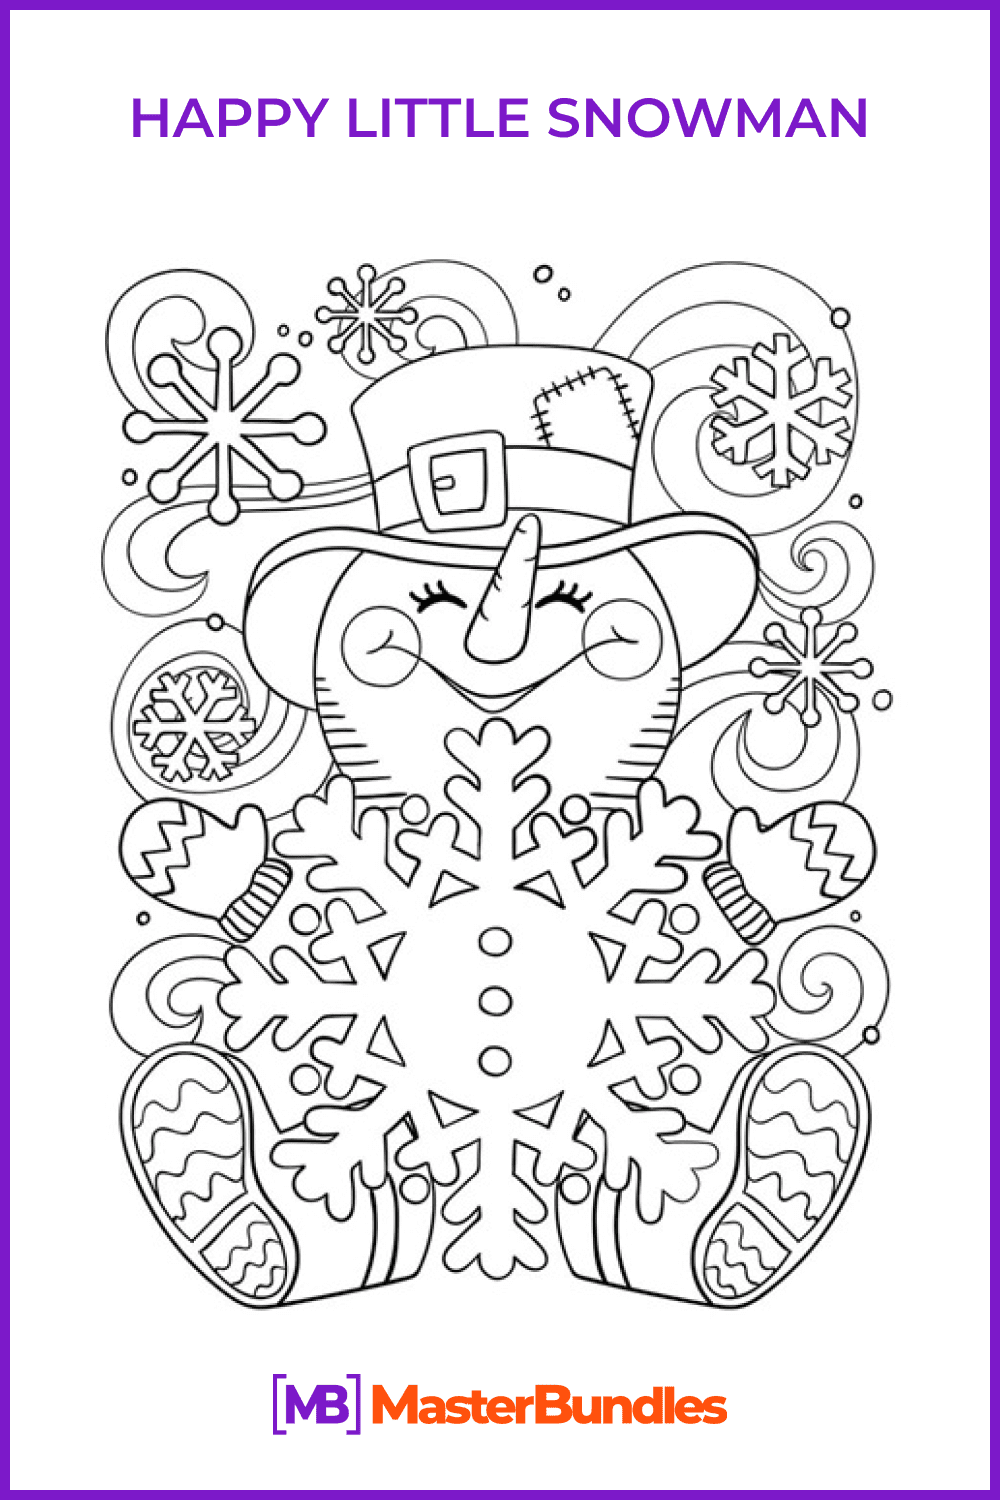 Happy little snowman coloring page pinterest image.